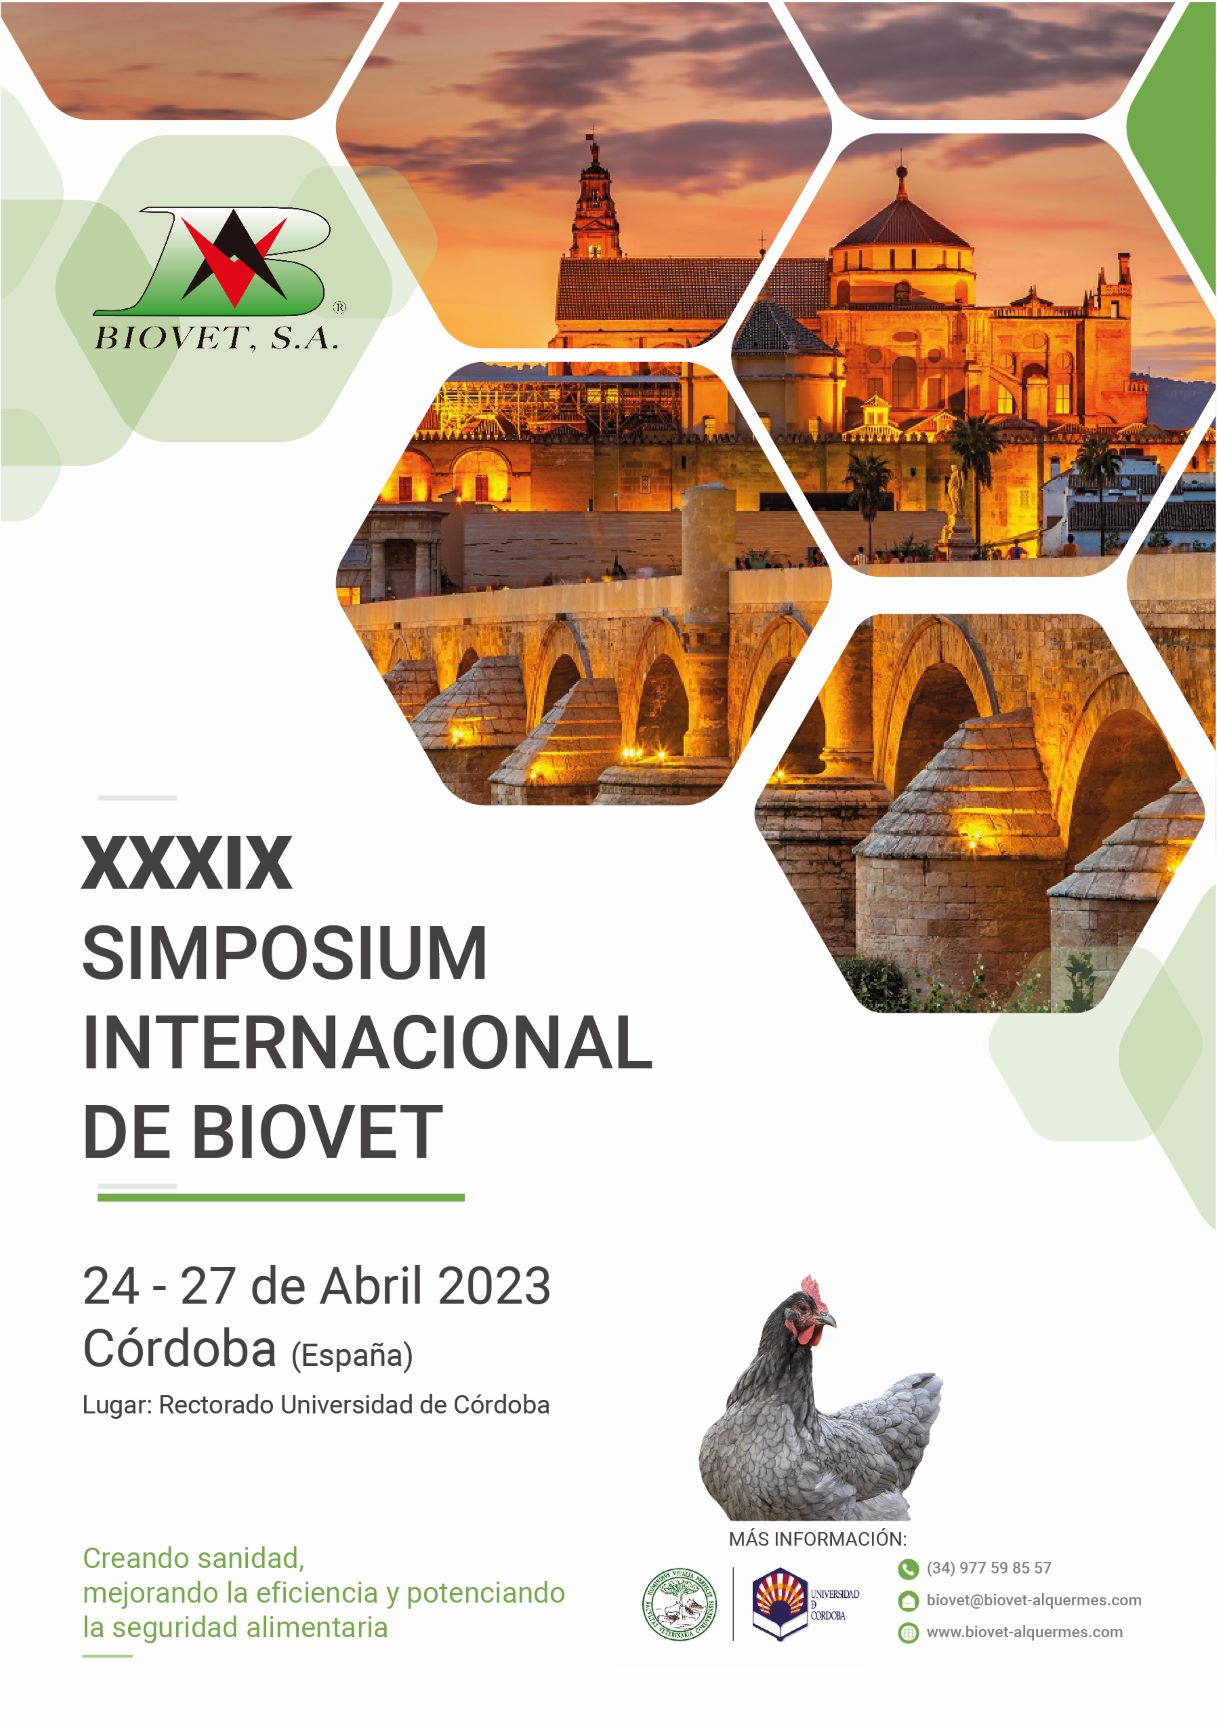 The XXXIX Biovet International Symposium will be organized in Córdoba